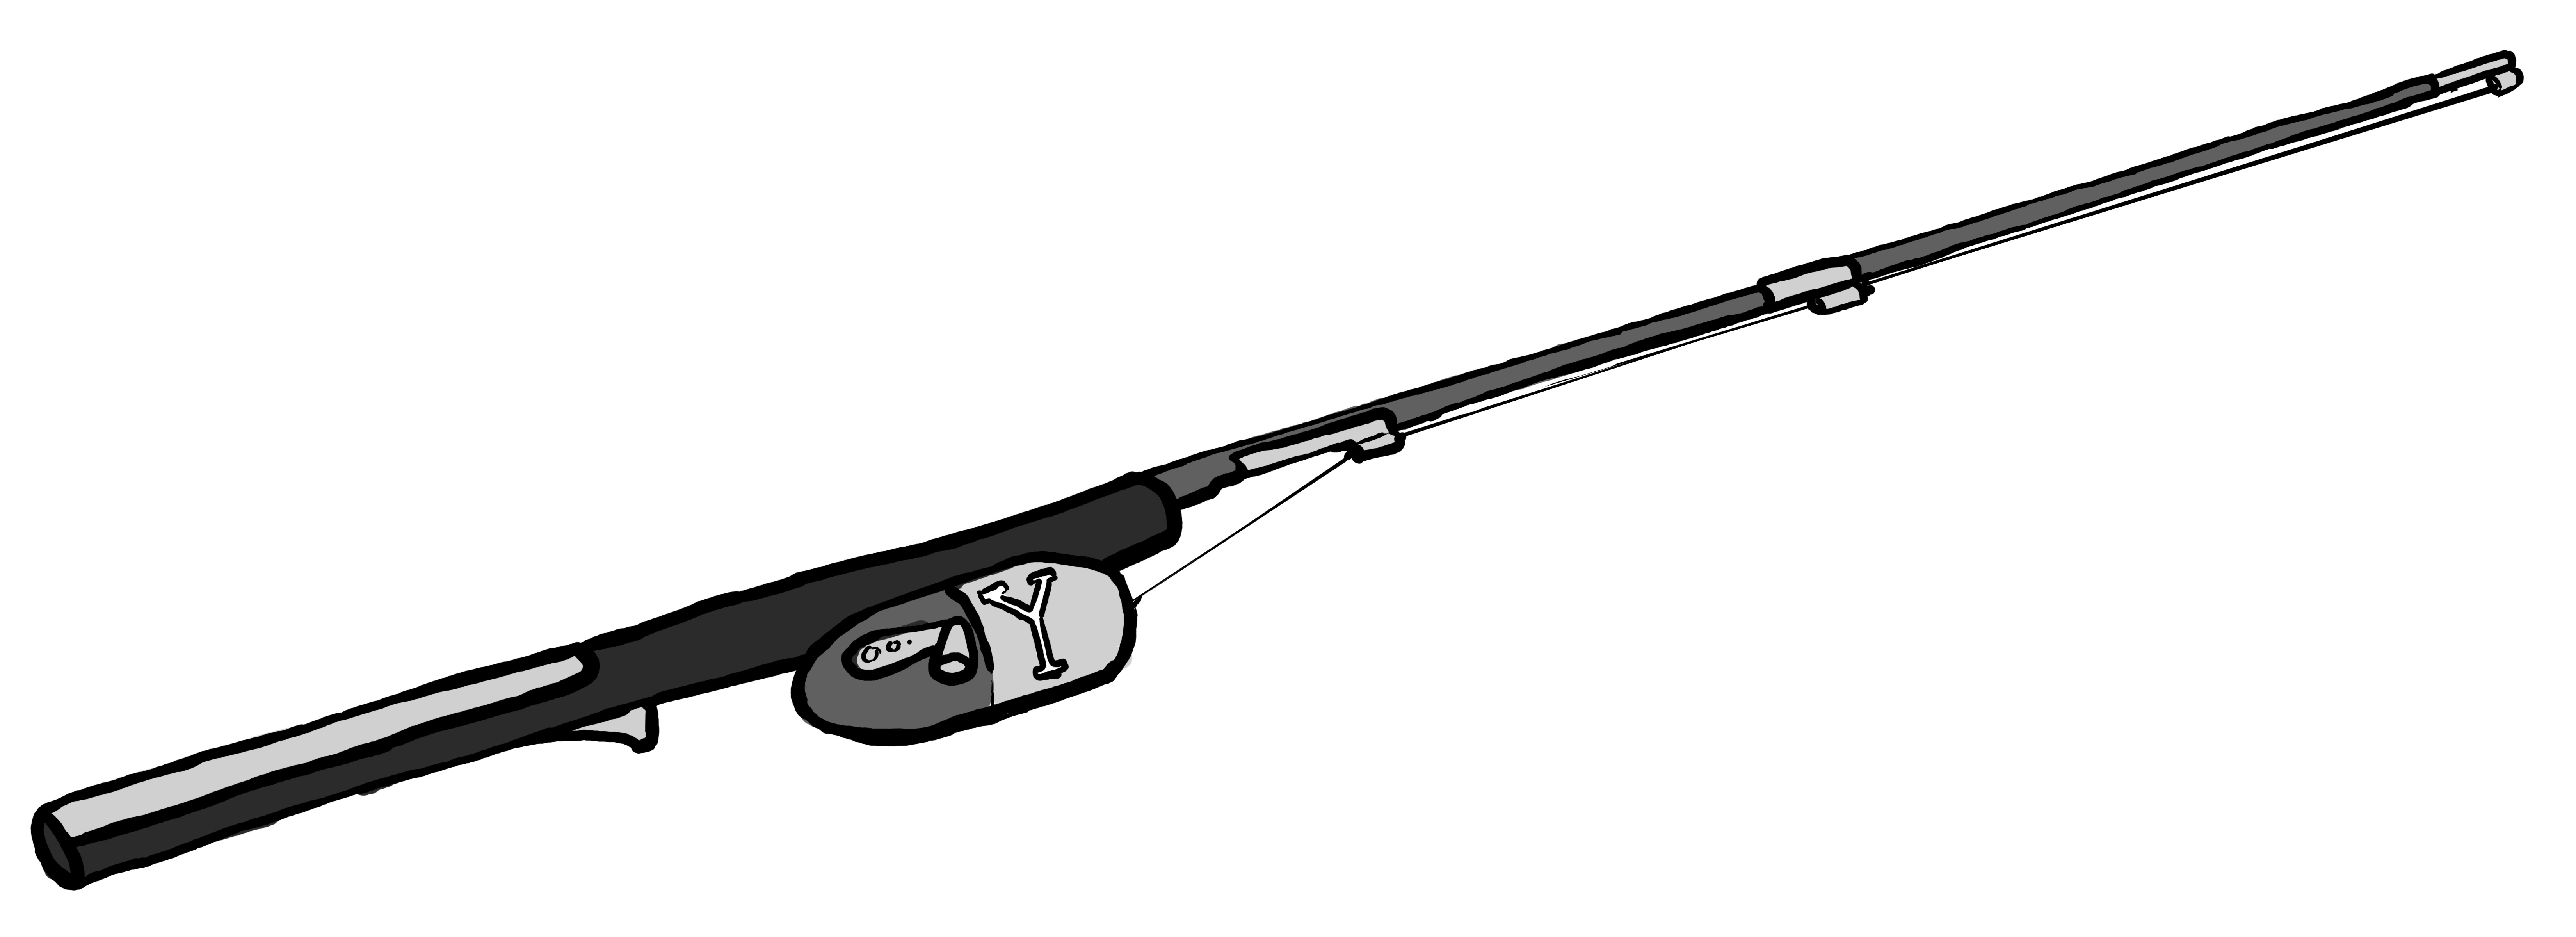 Fishing pole clipart fishing rod image 6 - Clipartix